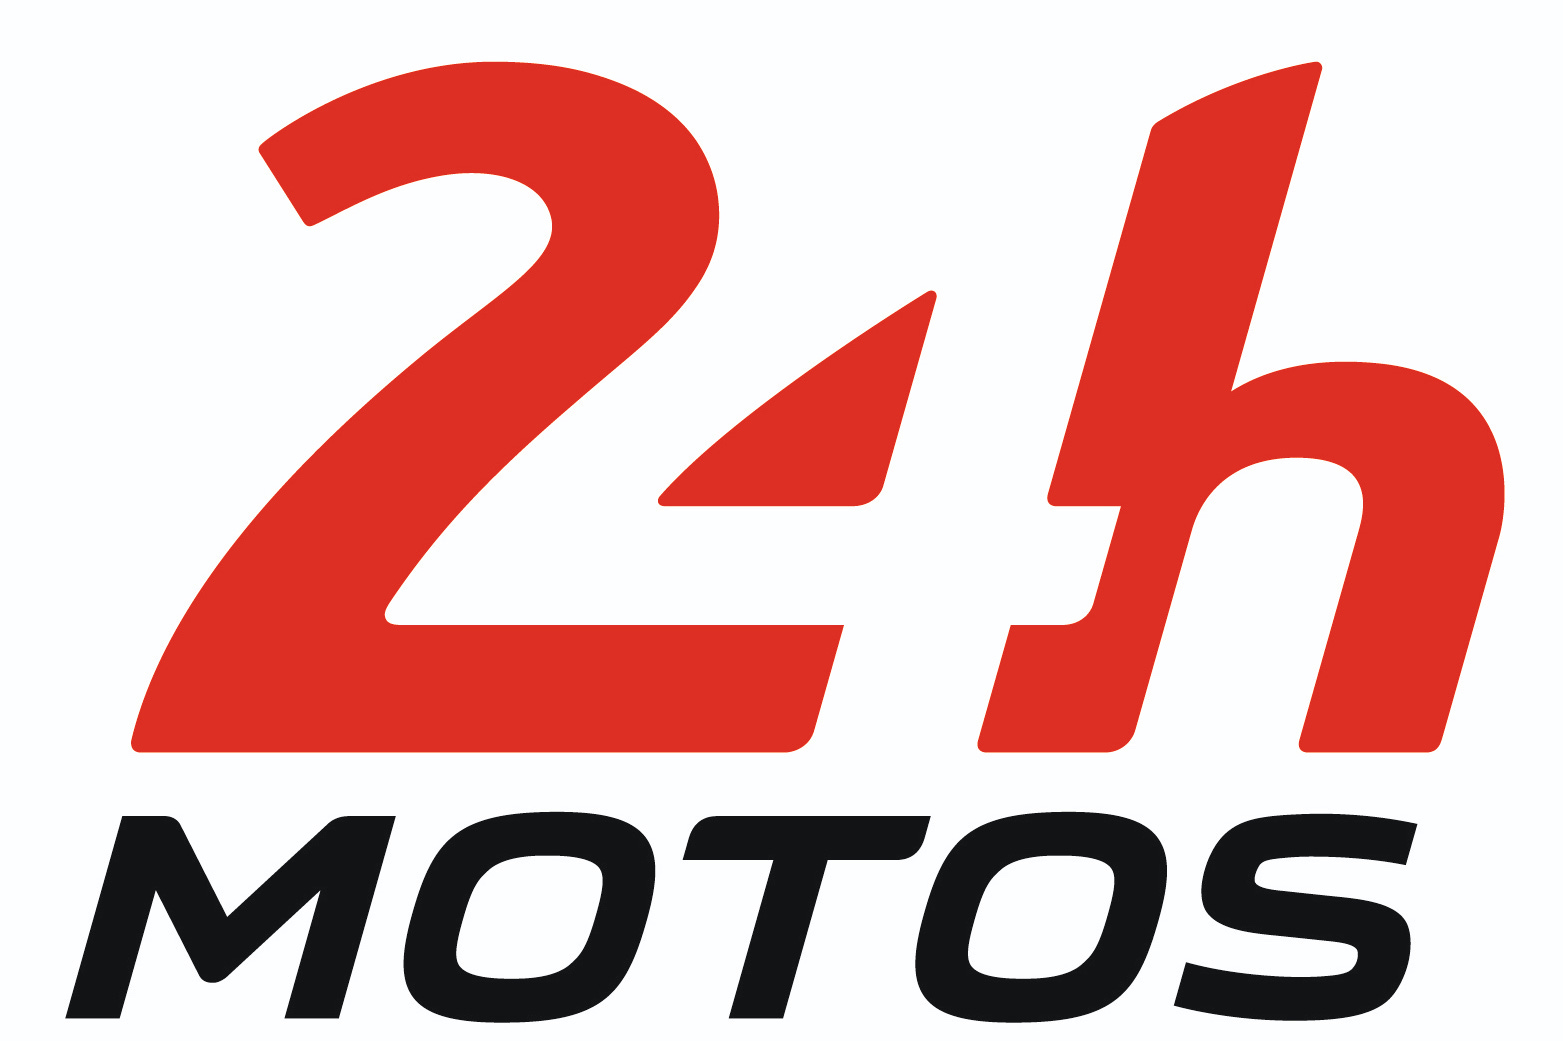 24 Heures Motos